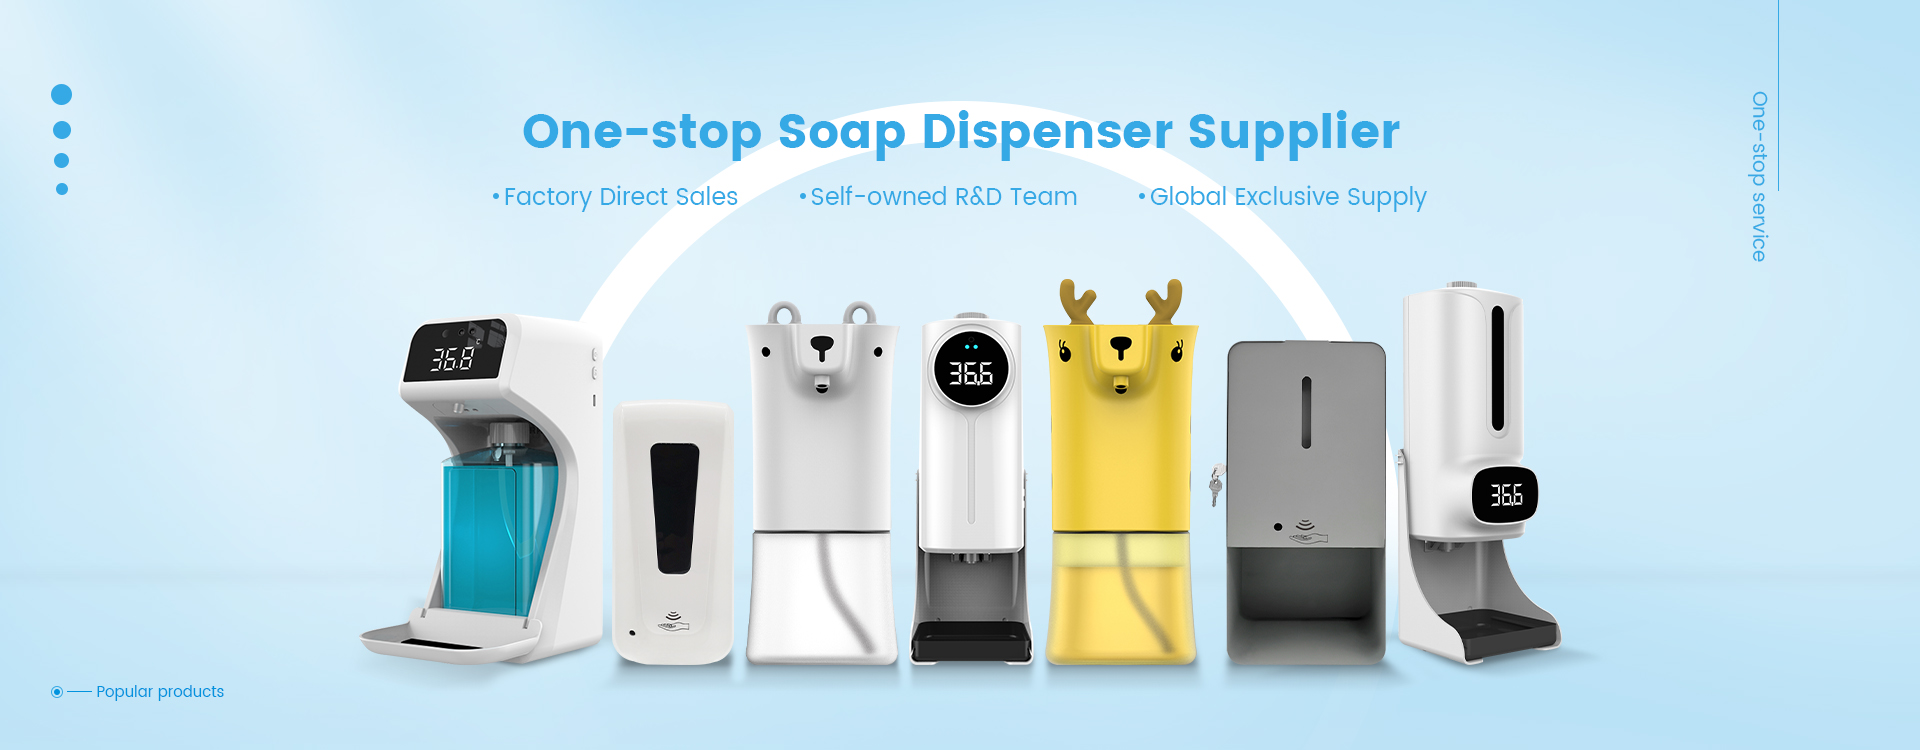 Global Automatic Soap Dispenser Market Trend 2021-2025